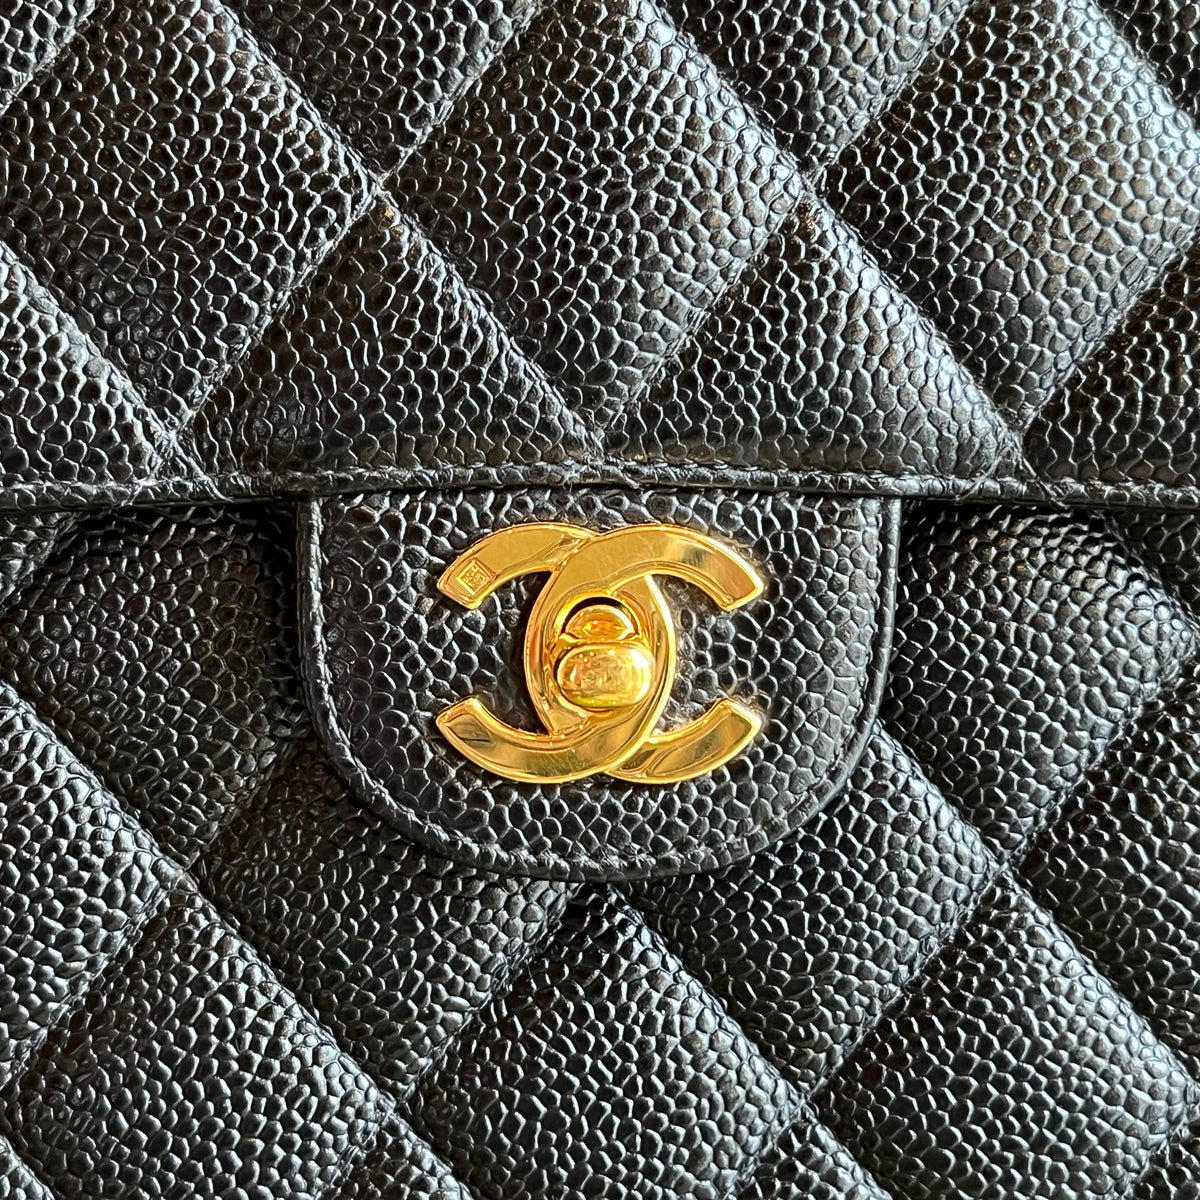 CHANEL Black Caviar Leather Vintage Single Flap Bag